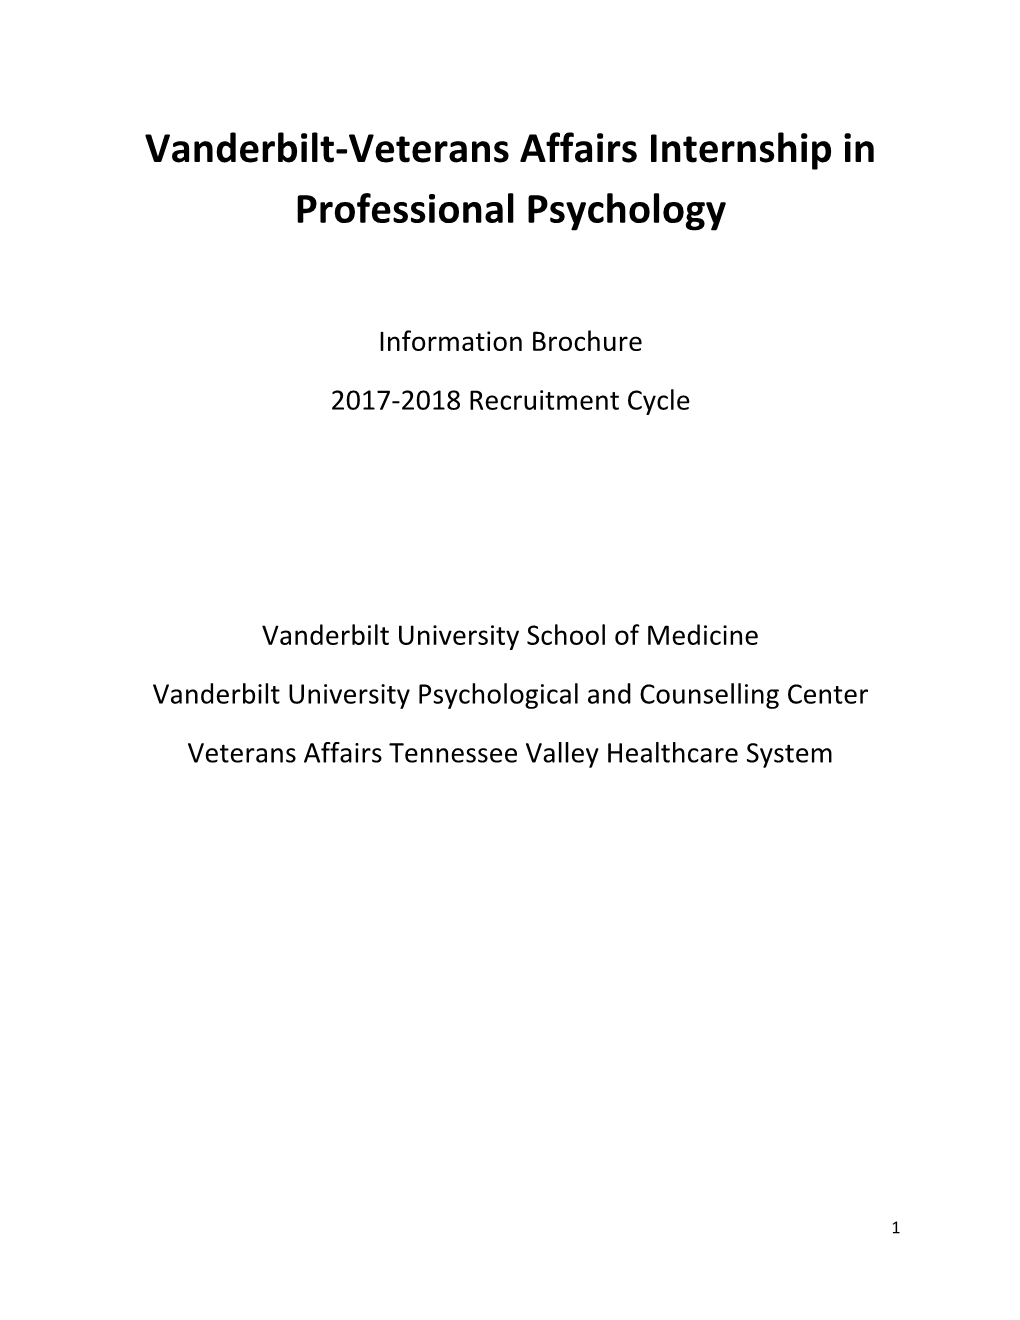 Vanderbilt-Veterans Affairs Internship in Professional Psychology